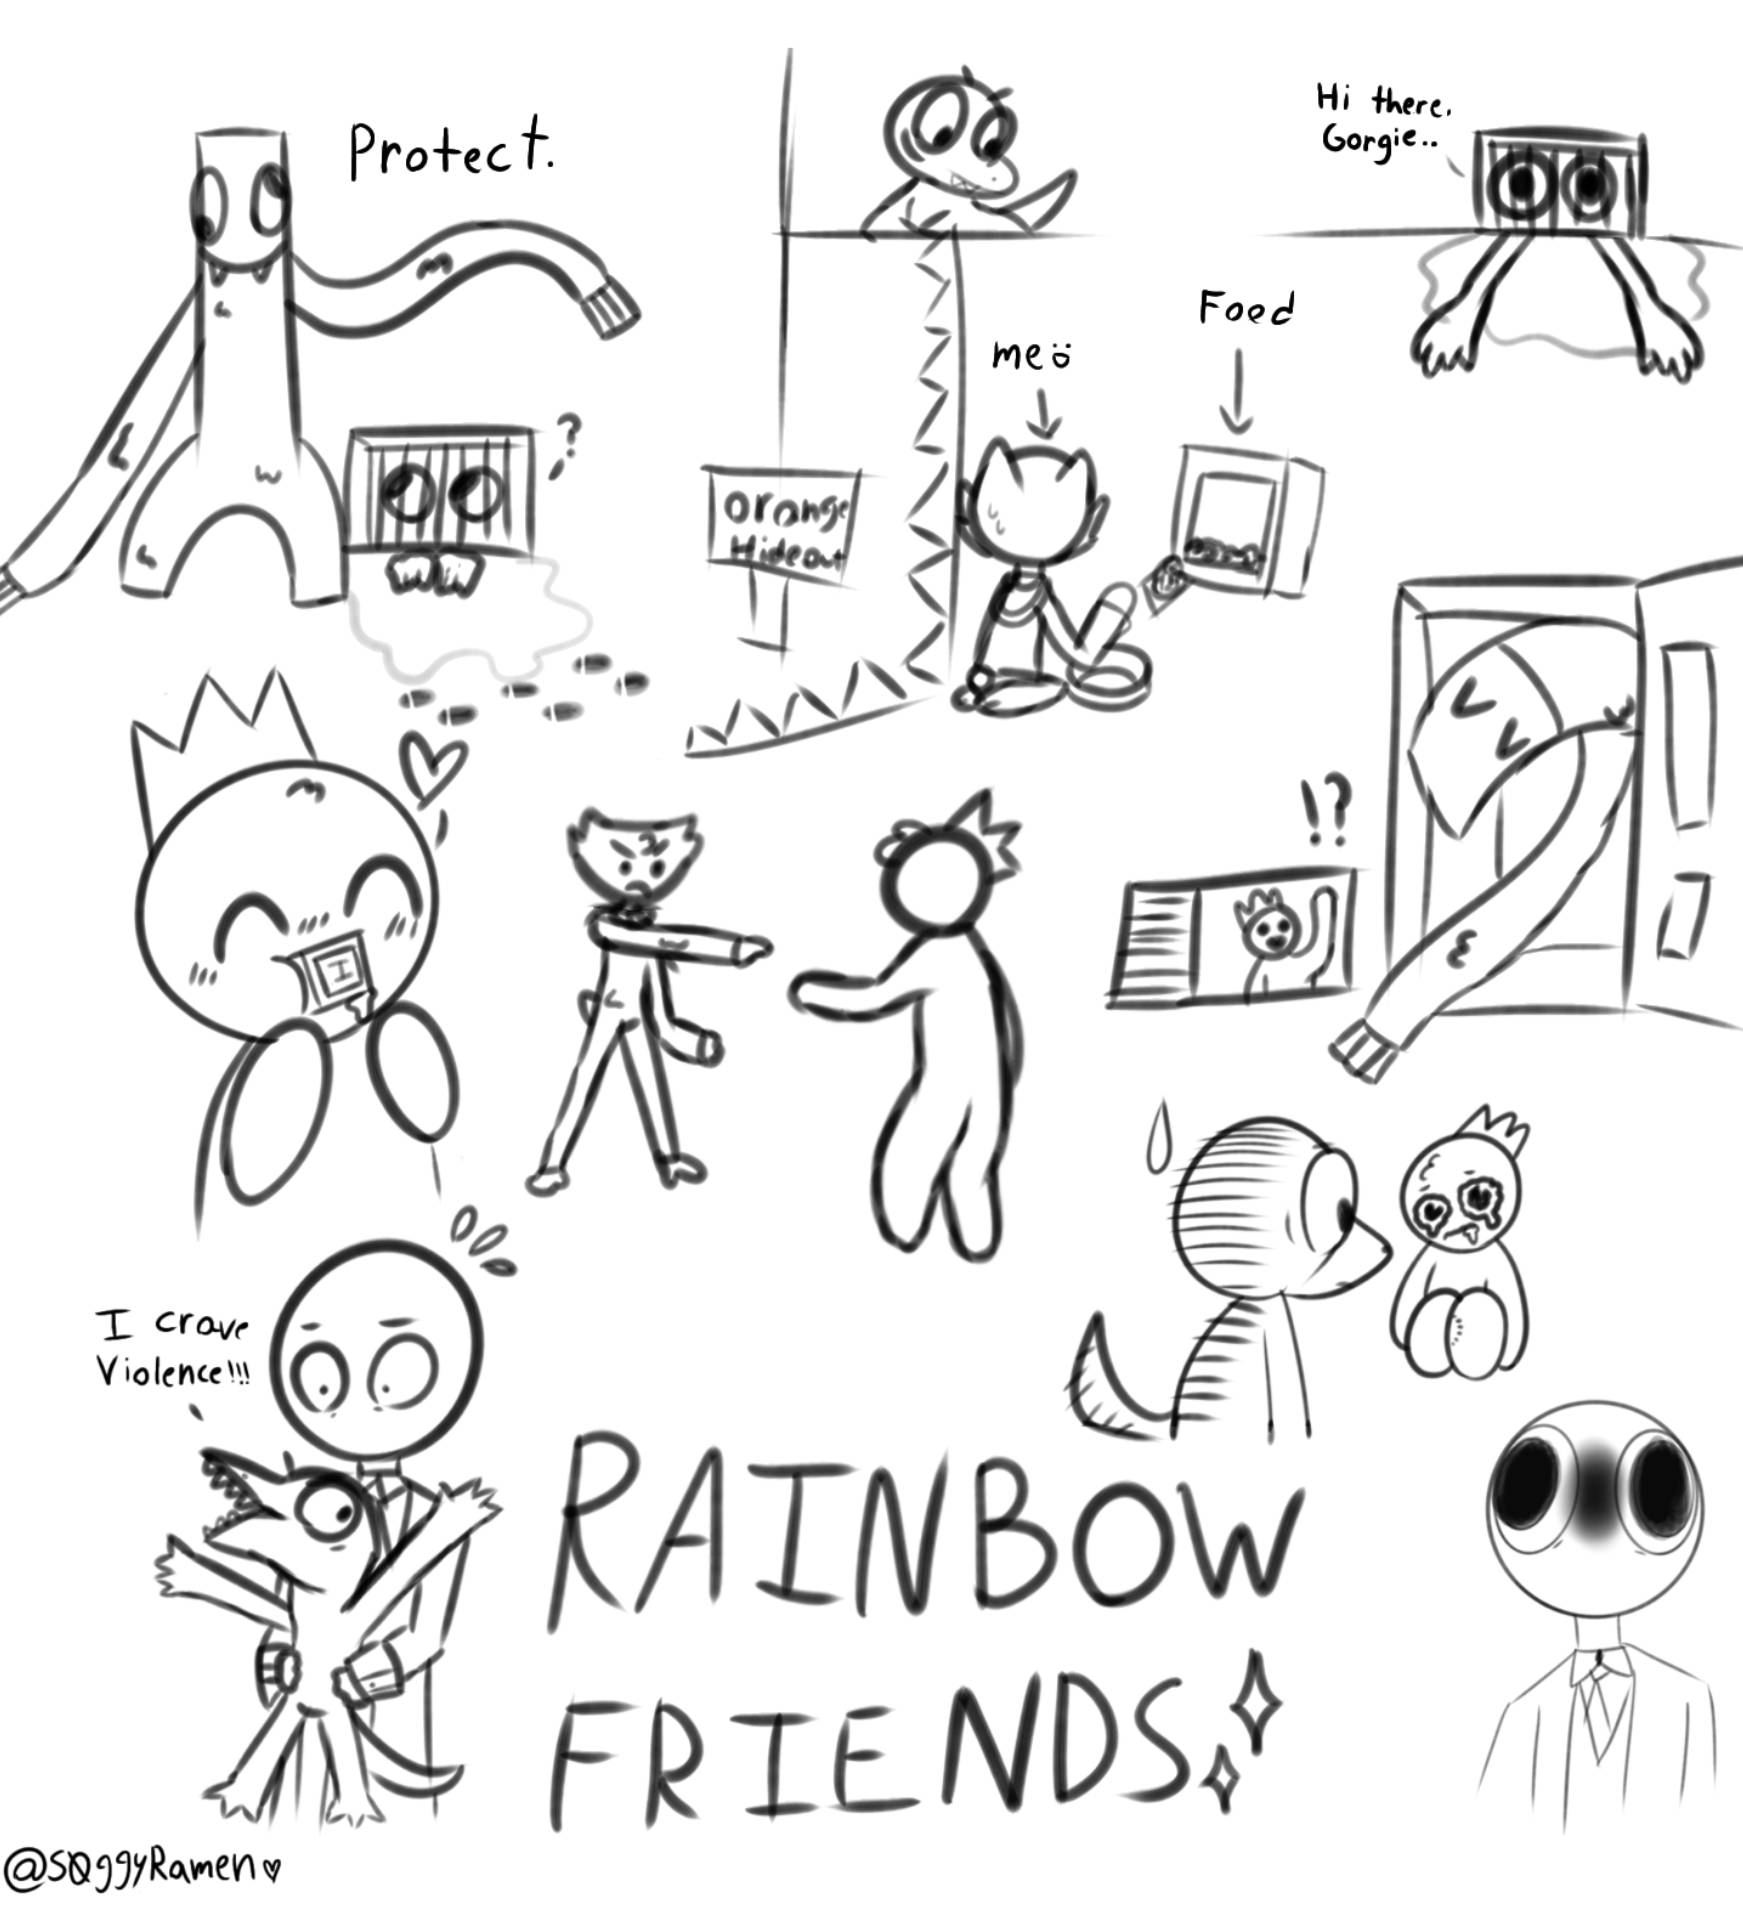 Rainbow Friends Blue by RileyToons on DeviantArt